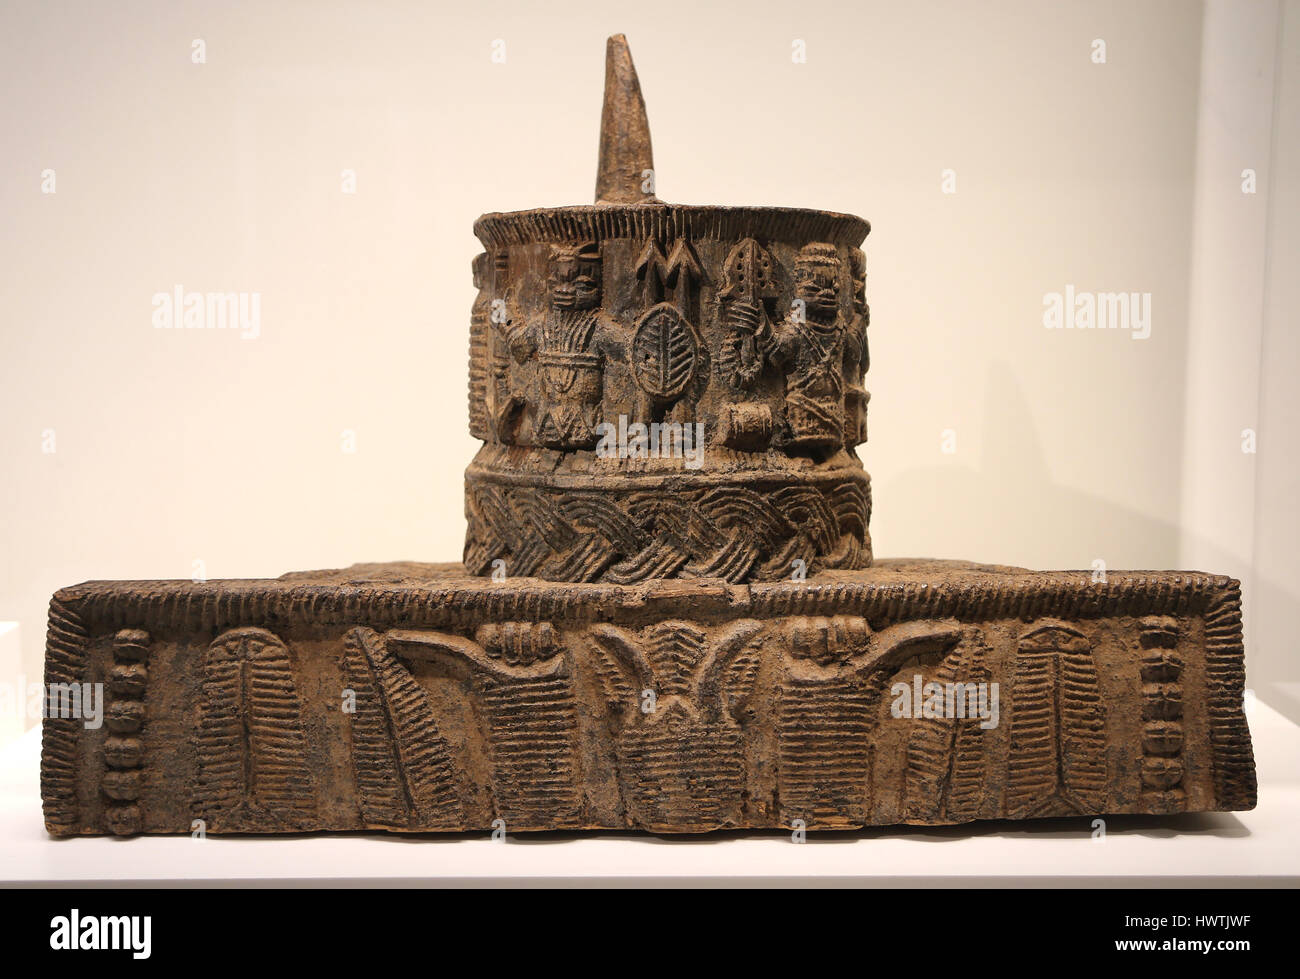 Altar to the hand. 19th Century, Ikegobo. Benin Empire, Edo people. Nigeria. Carved wood Stock Photo